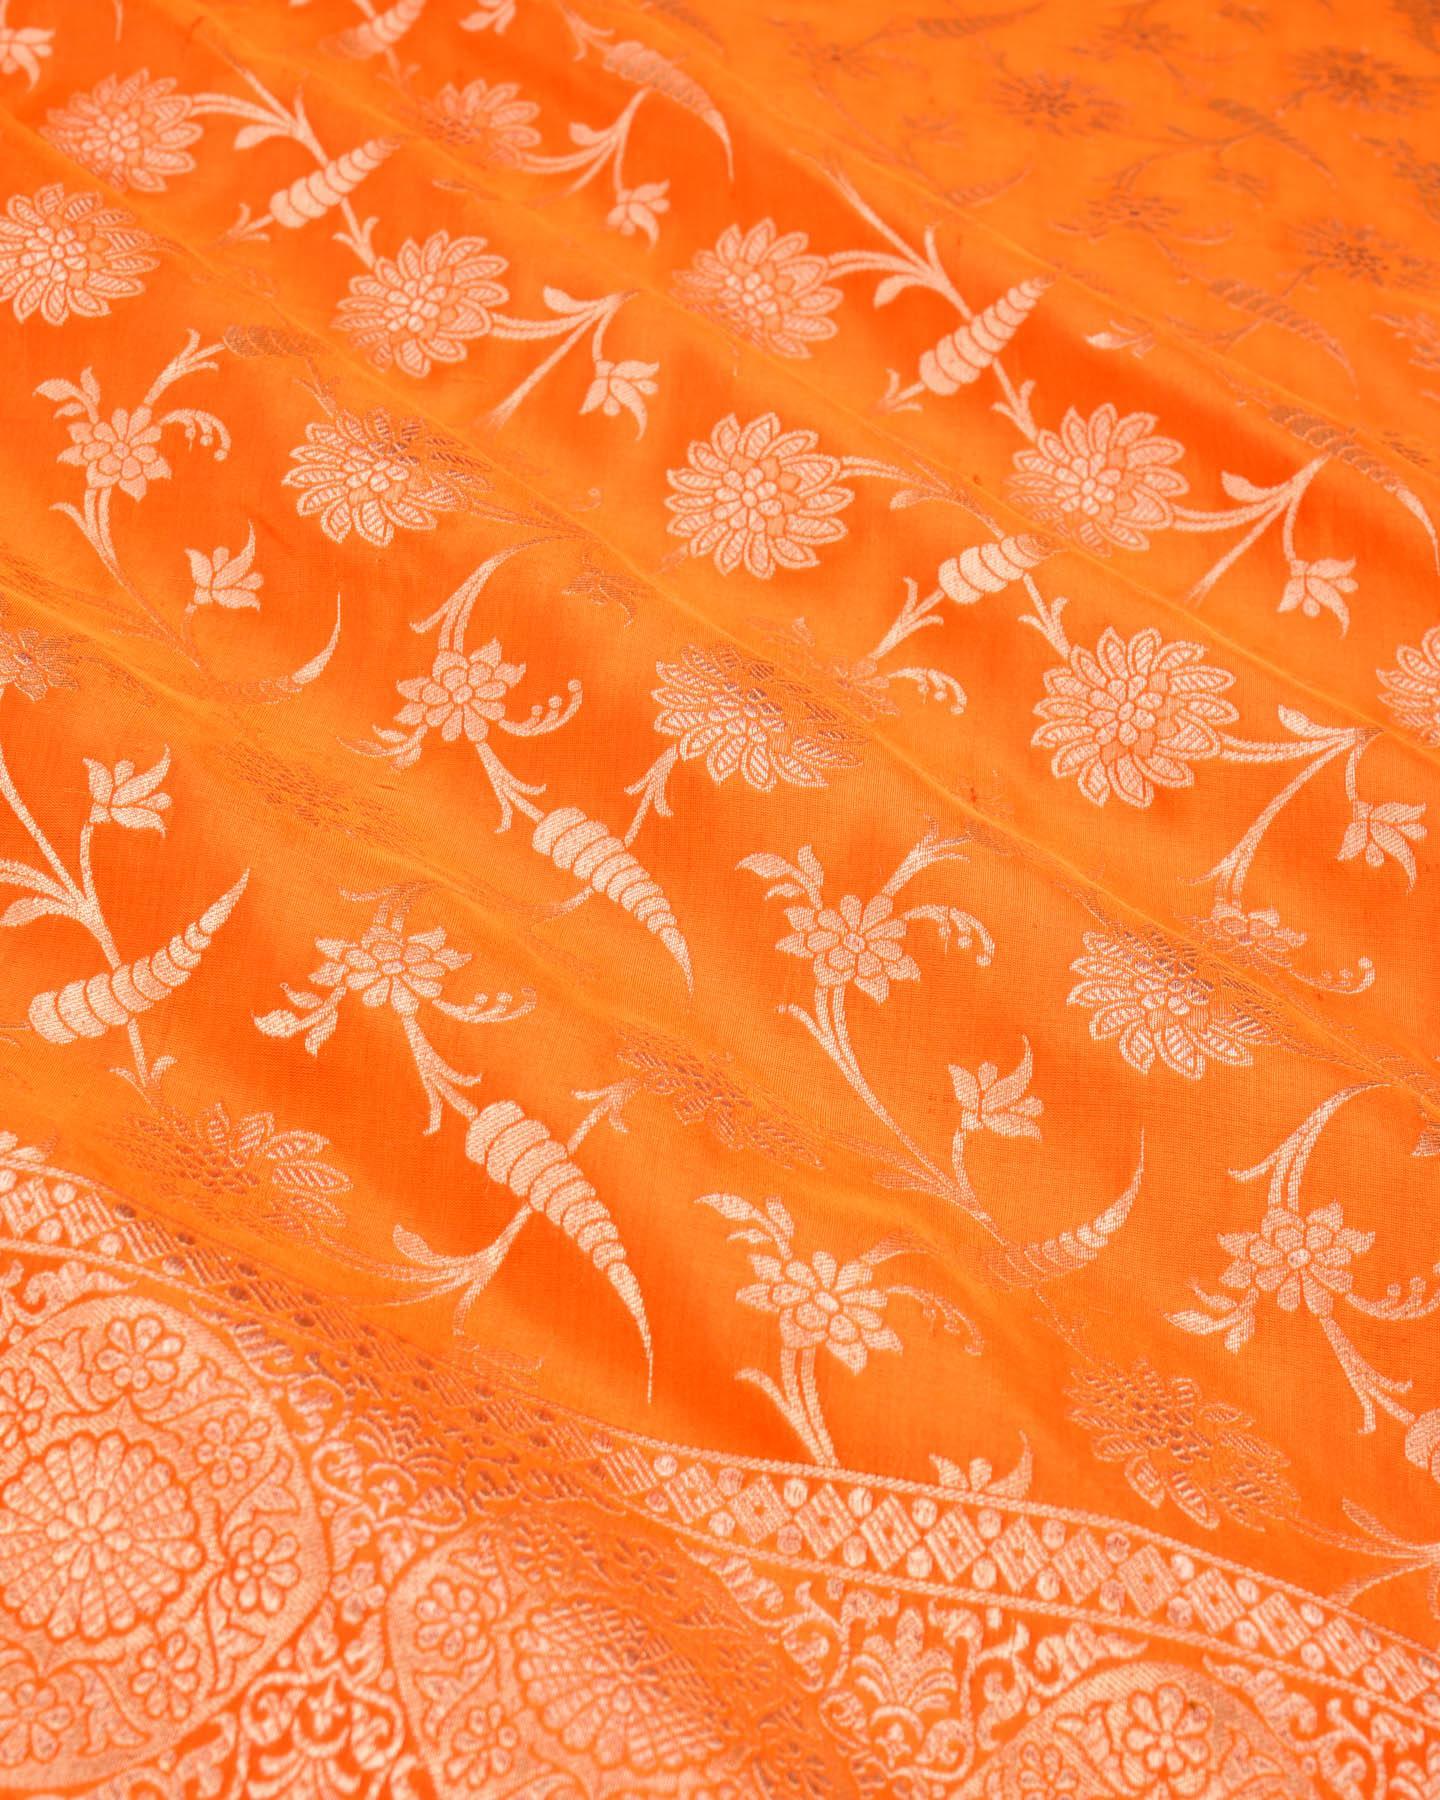 Orange Banarasi Mirchi Jaal Gold Zari Cutwork Brocade Handwoven Katan Silk Saree - By HolyWeaves, Benares